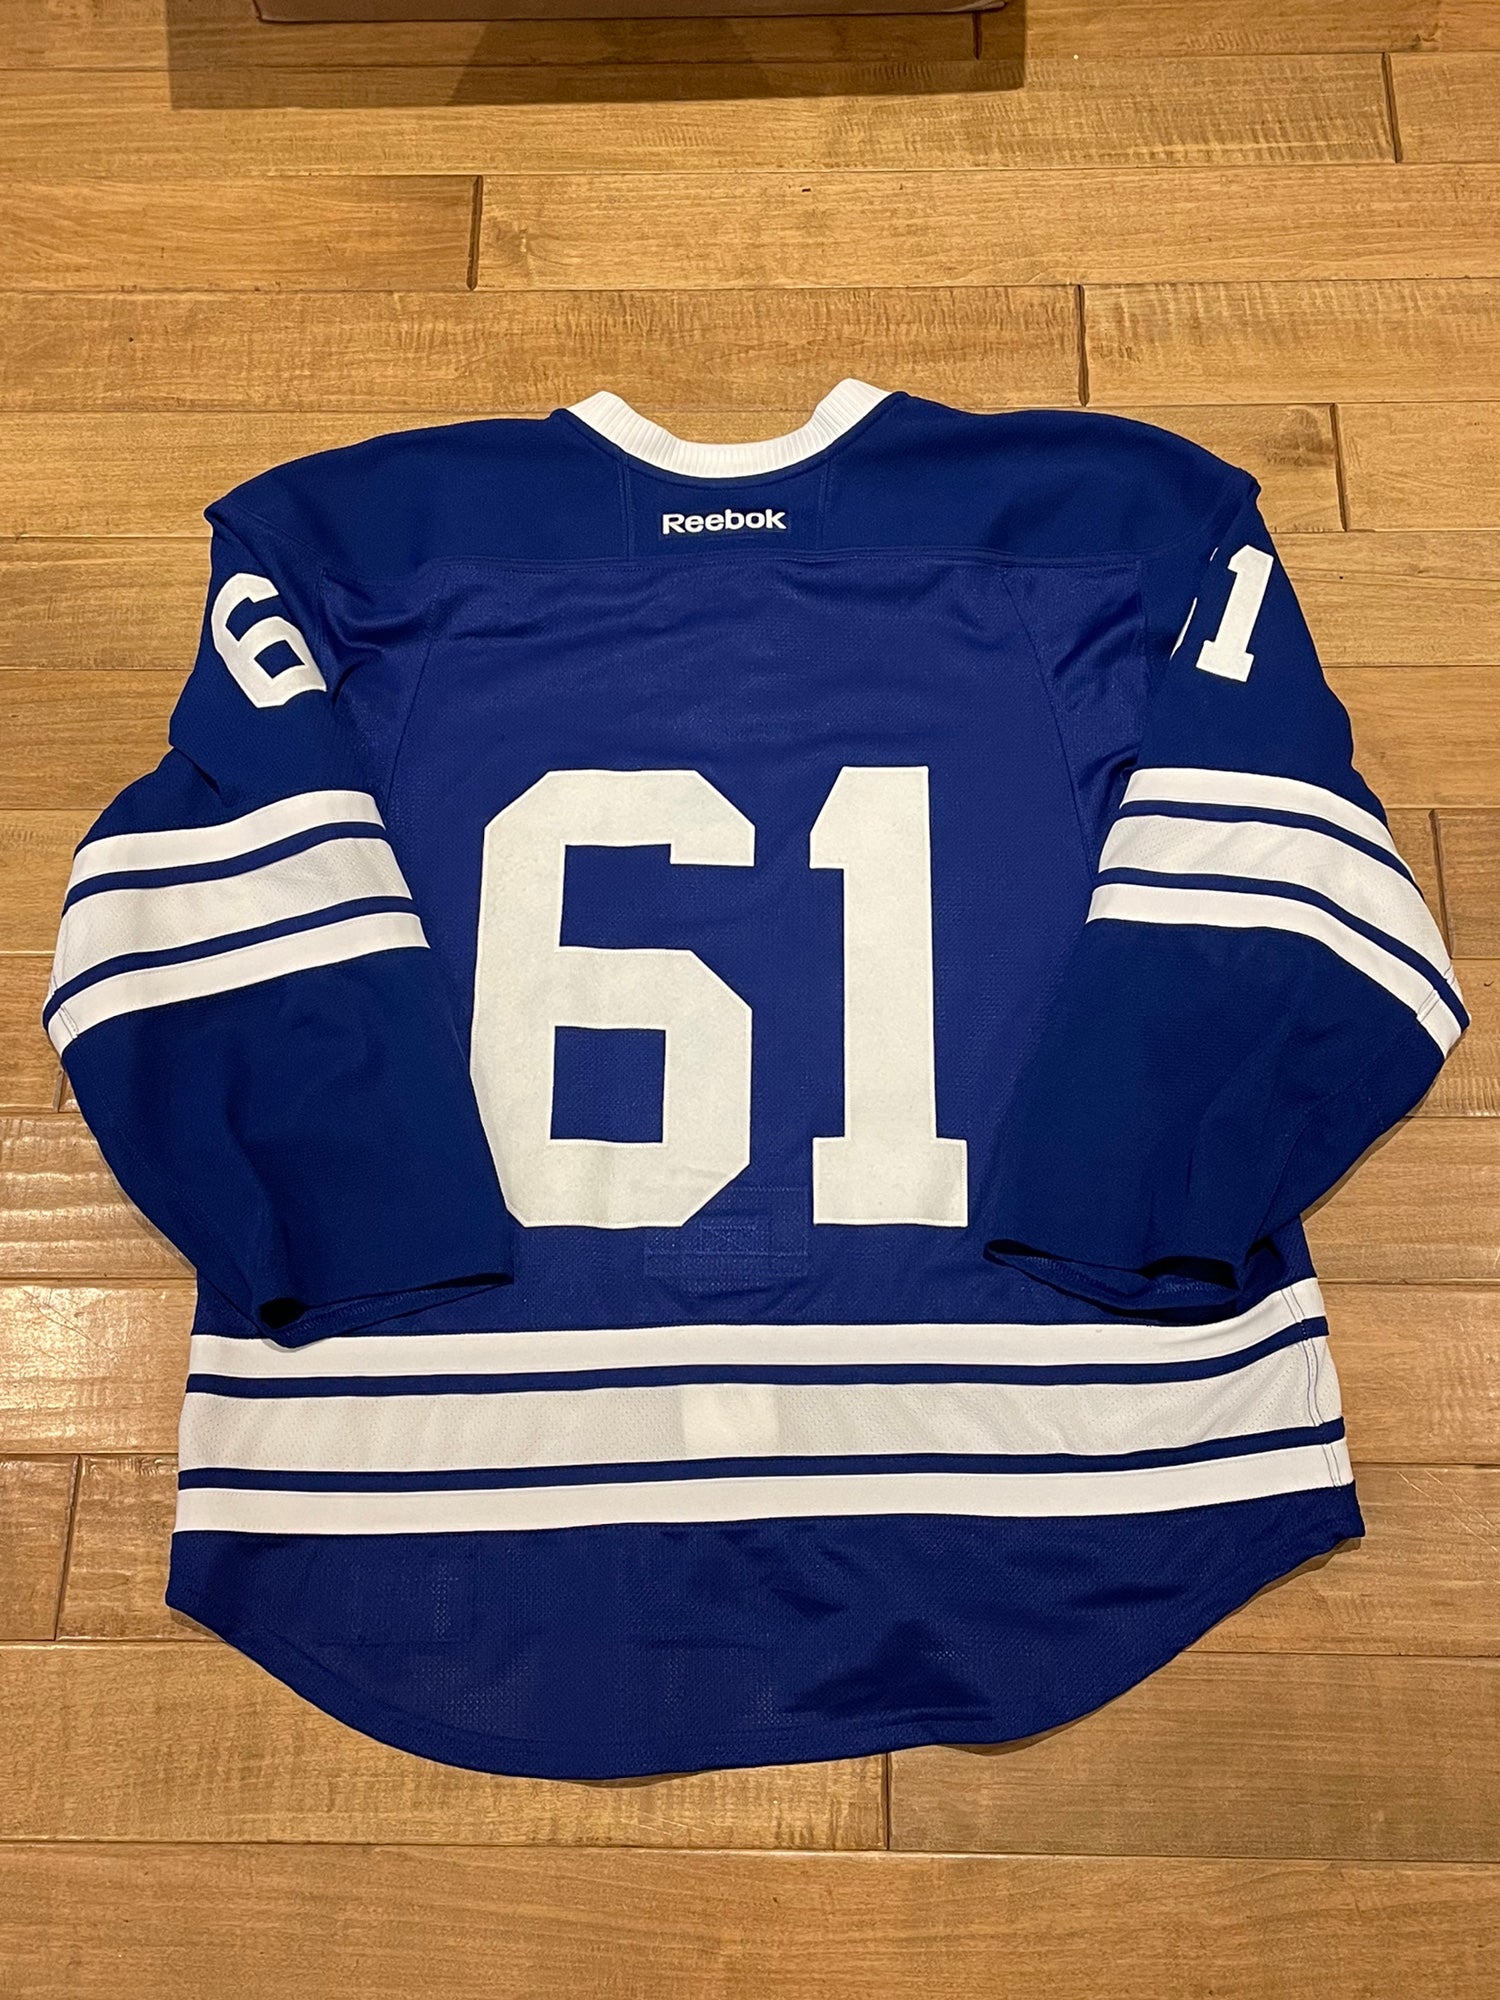 Reebok 6100 Authentic Toronto Maple Leafs Jersey Vintage White Alternate 56